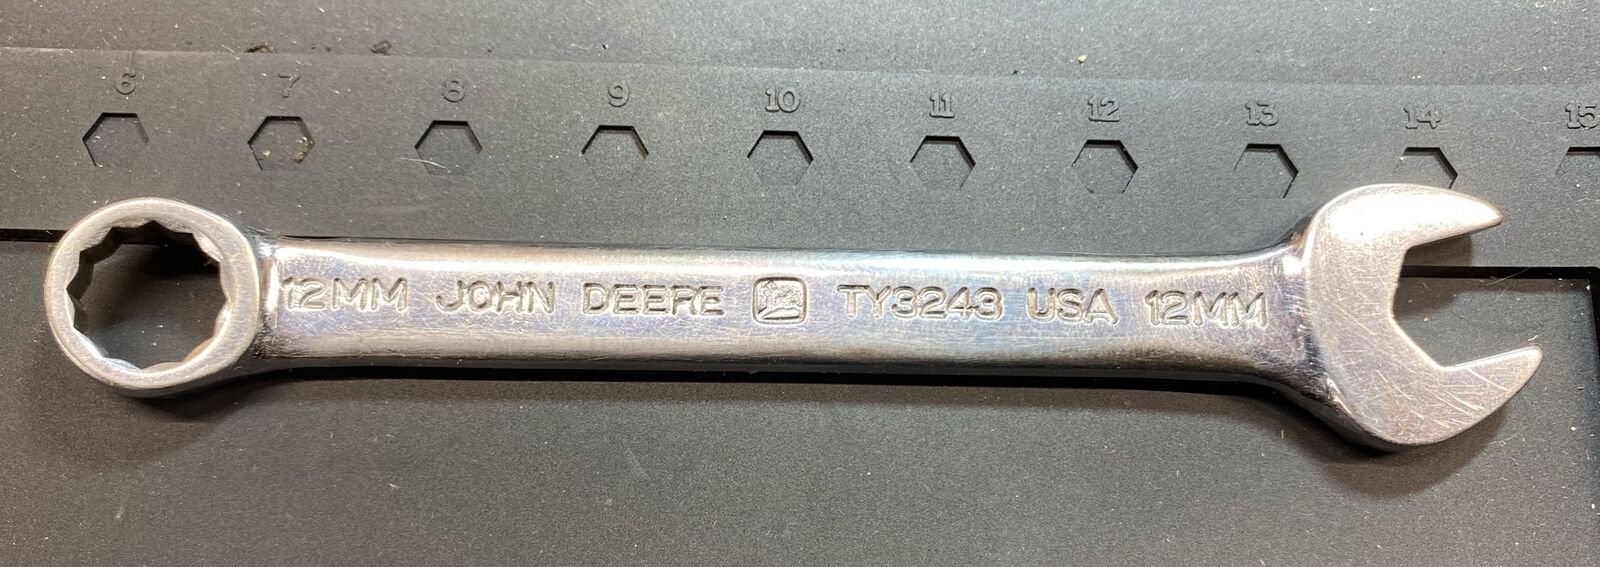 John Deere USA TY3243 12MM Combination Wrench 12 Point, Running Deer Logo